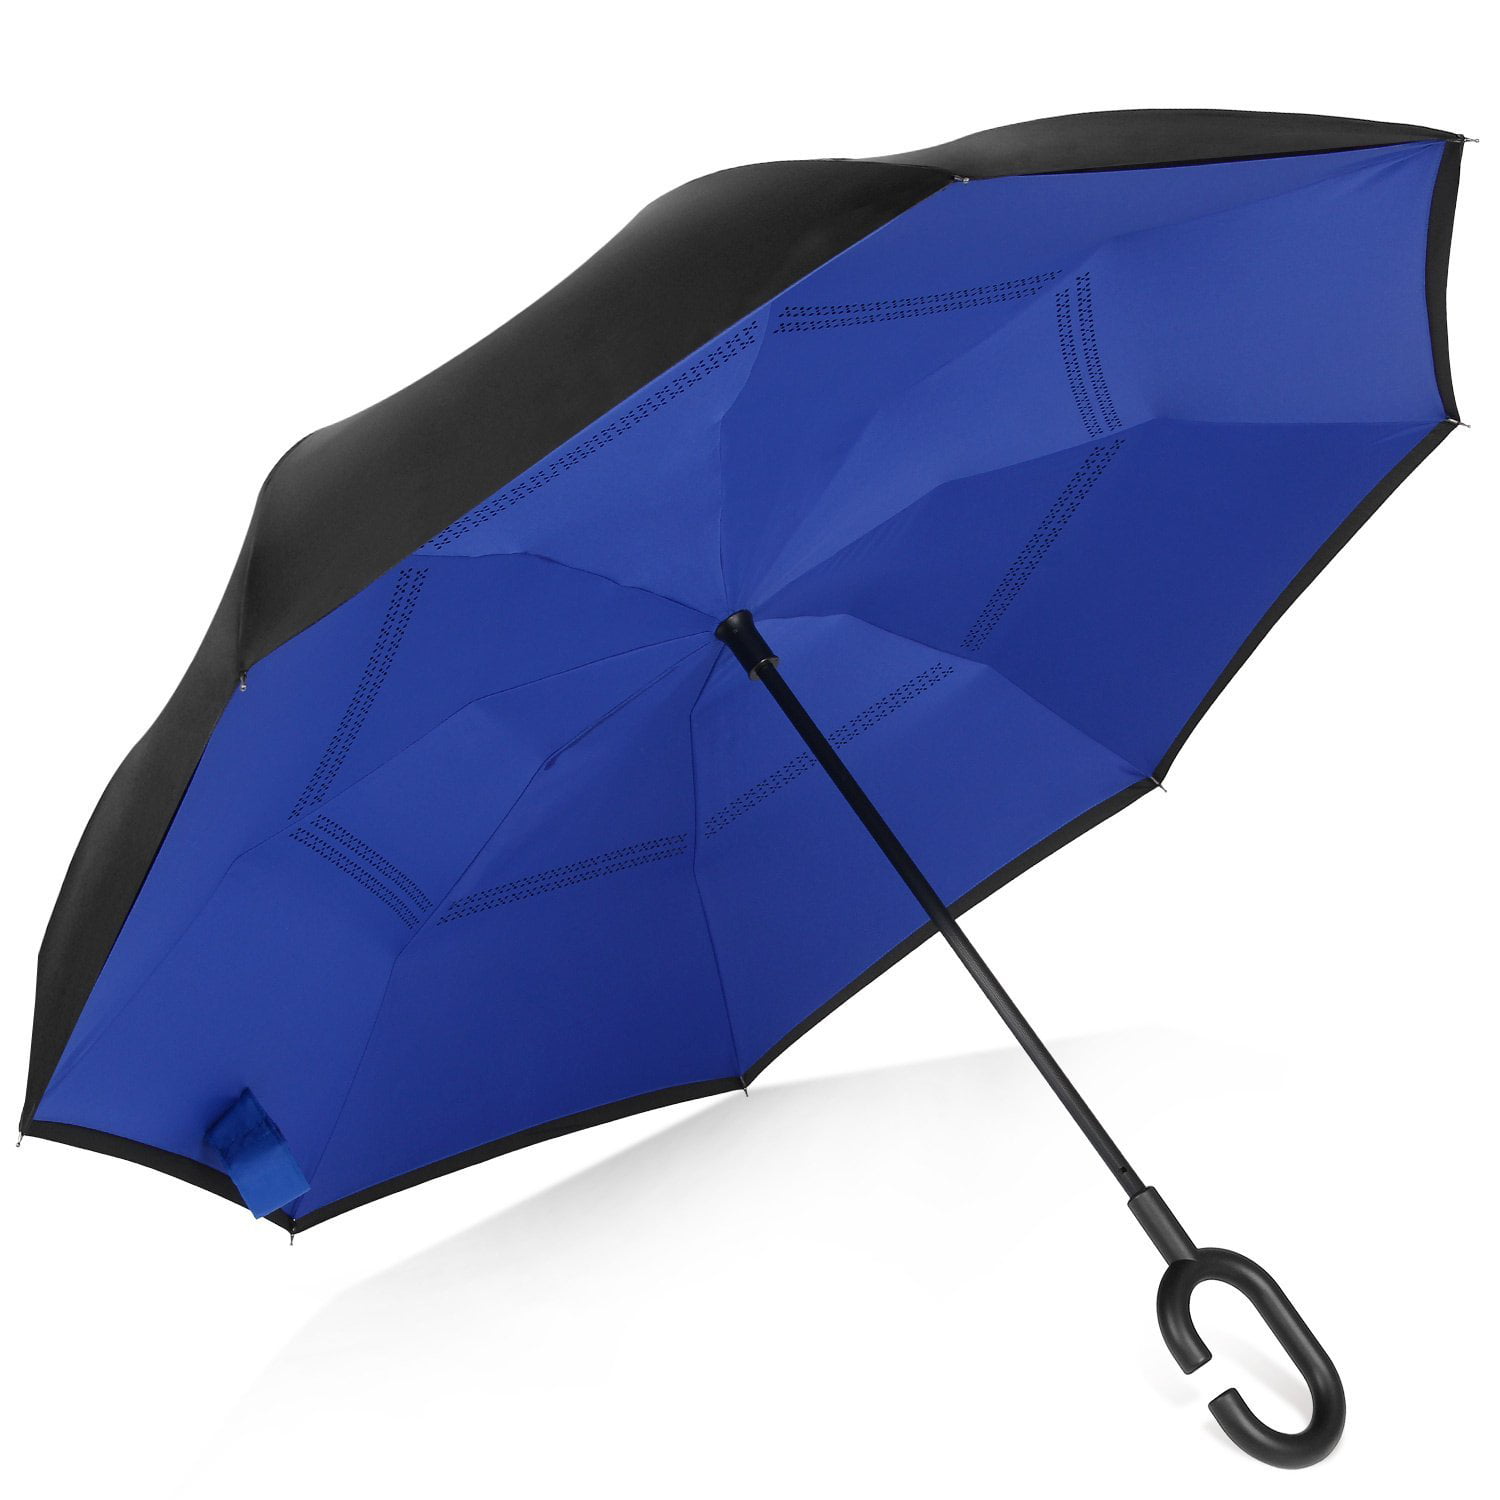 Automatic Reverse Umbrella Rain Women Black Coating Fashion Color Inverted Chuva Umbrella For Man 3 Folding Sunny Automatic,blue,Russian Federation Fantastic-Journey SB-122